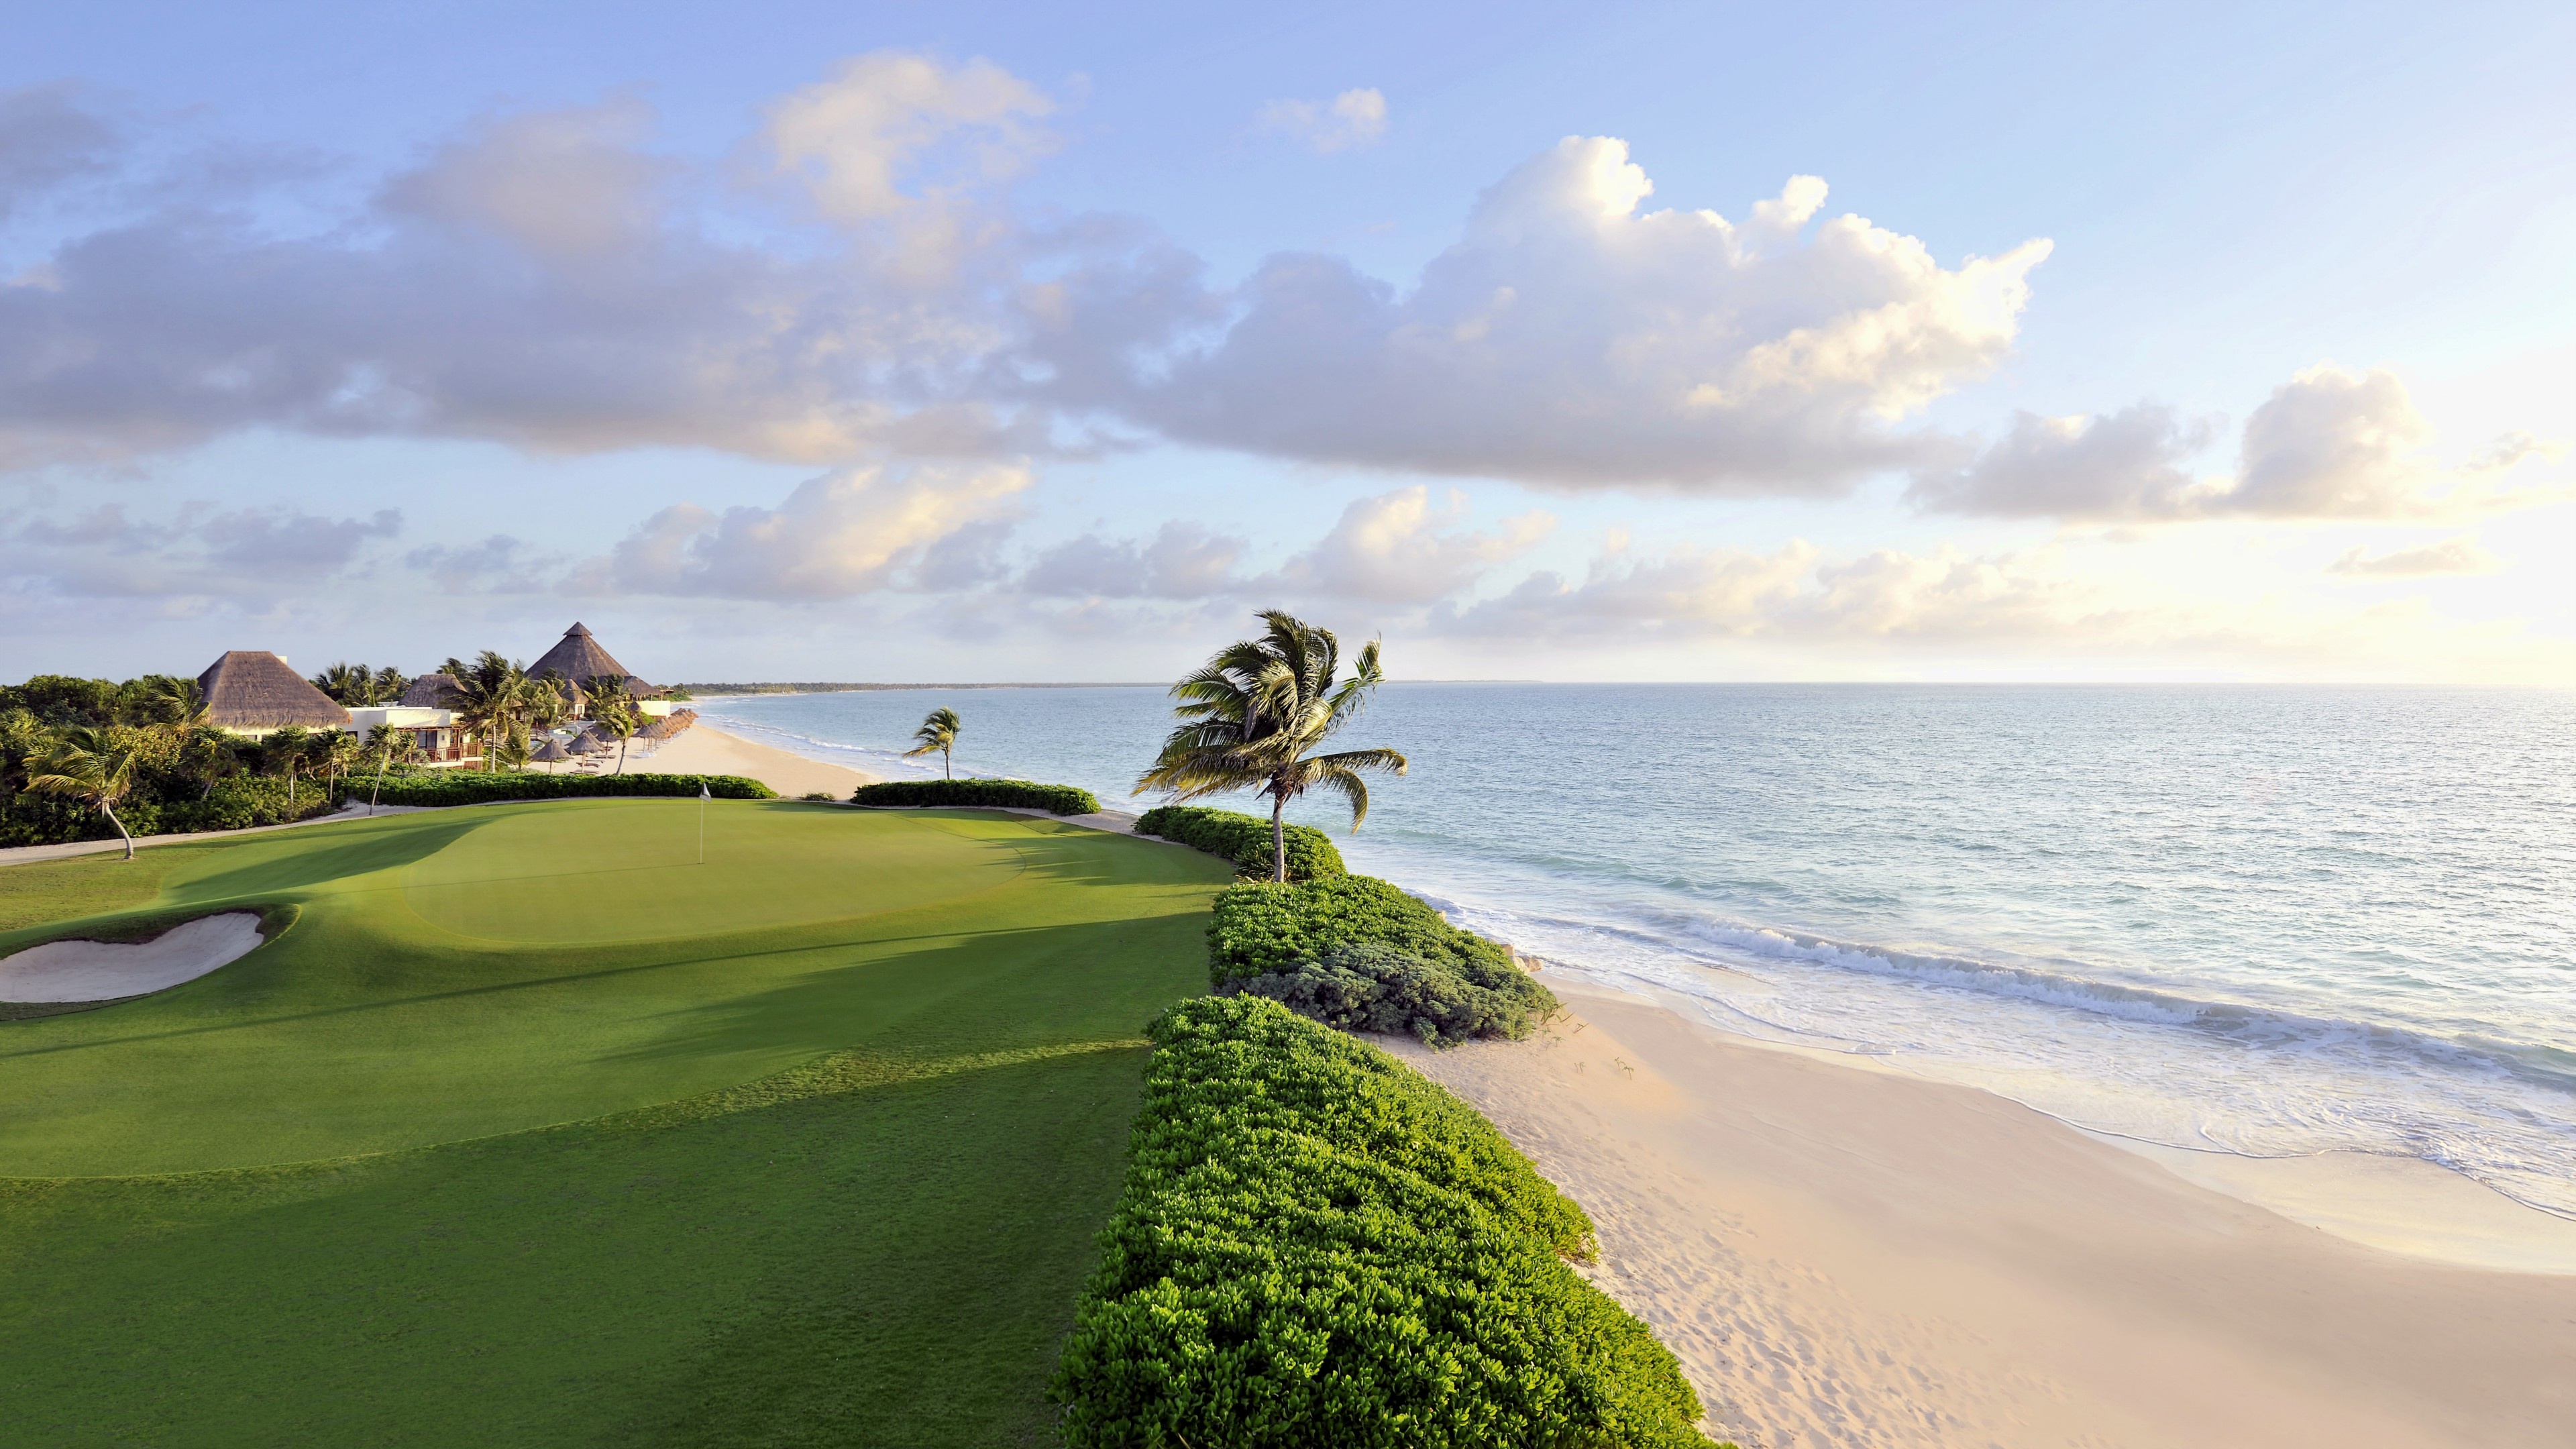 Golf Course: Sports, Landscape, Sea, Bay, Water, Nature, Shore, Sand, Grass, Field, Clouds, Beach, Coast, Palm trees, Windy, Ocean. 3840x2160 4K Wallpaper.